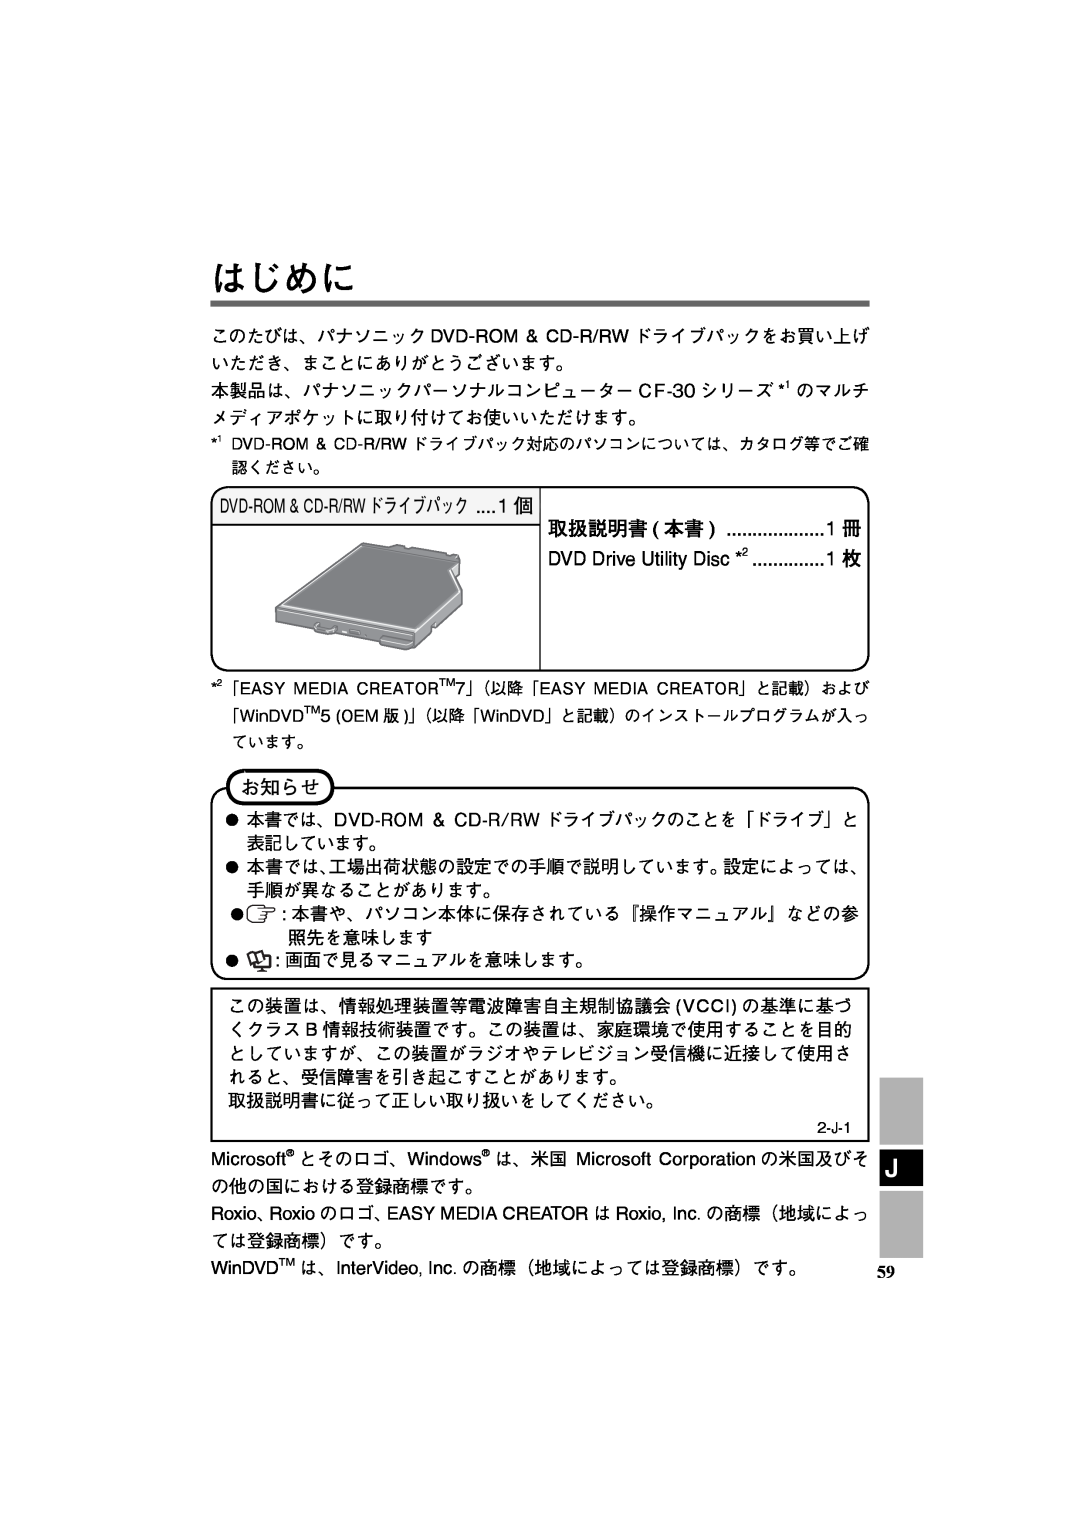 Panasonic CF-VDR301U specifications はじめに, お知らせ, 1 冊, 1 枚, DVD Drive Utility Disc, 1 個 